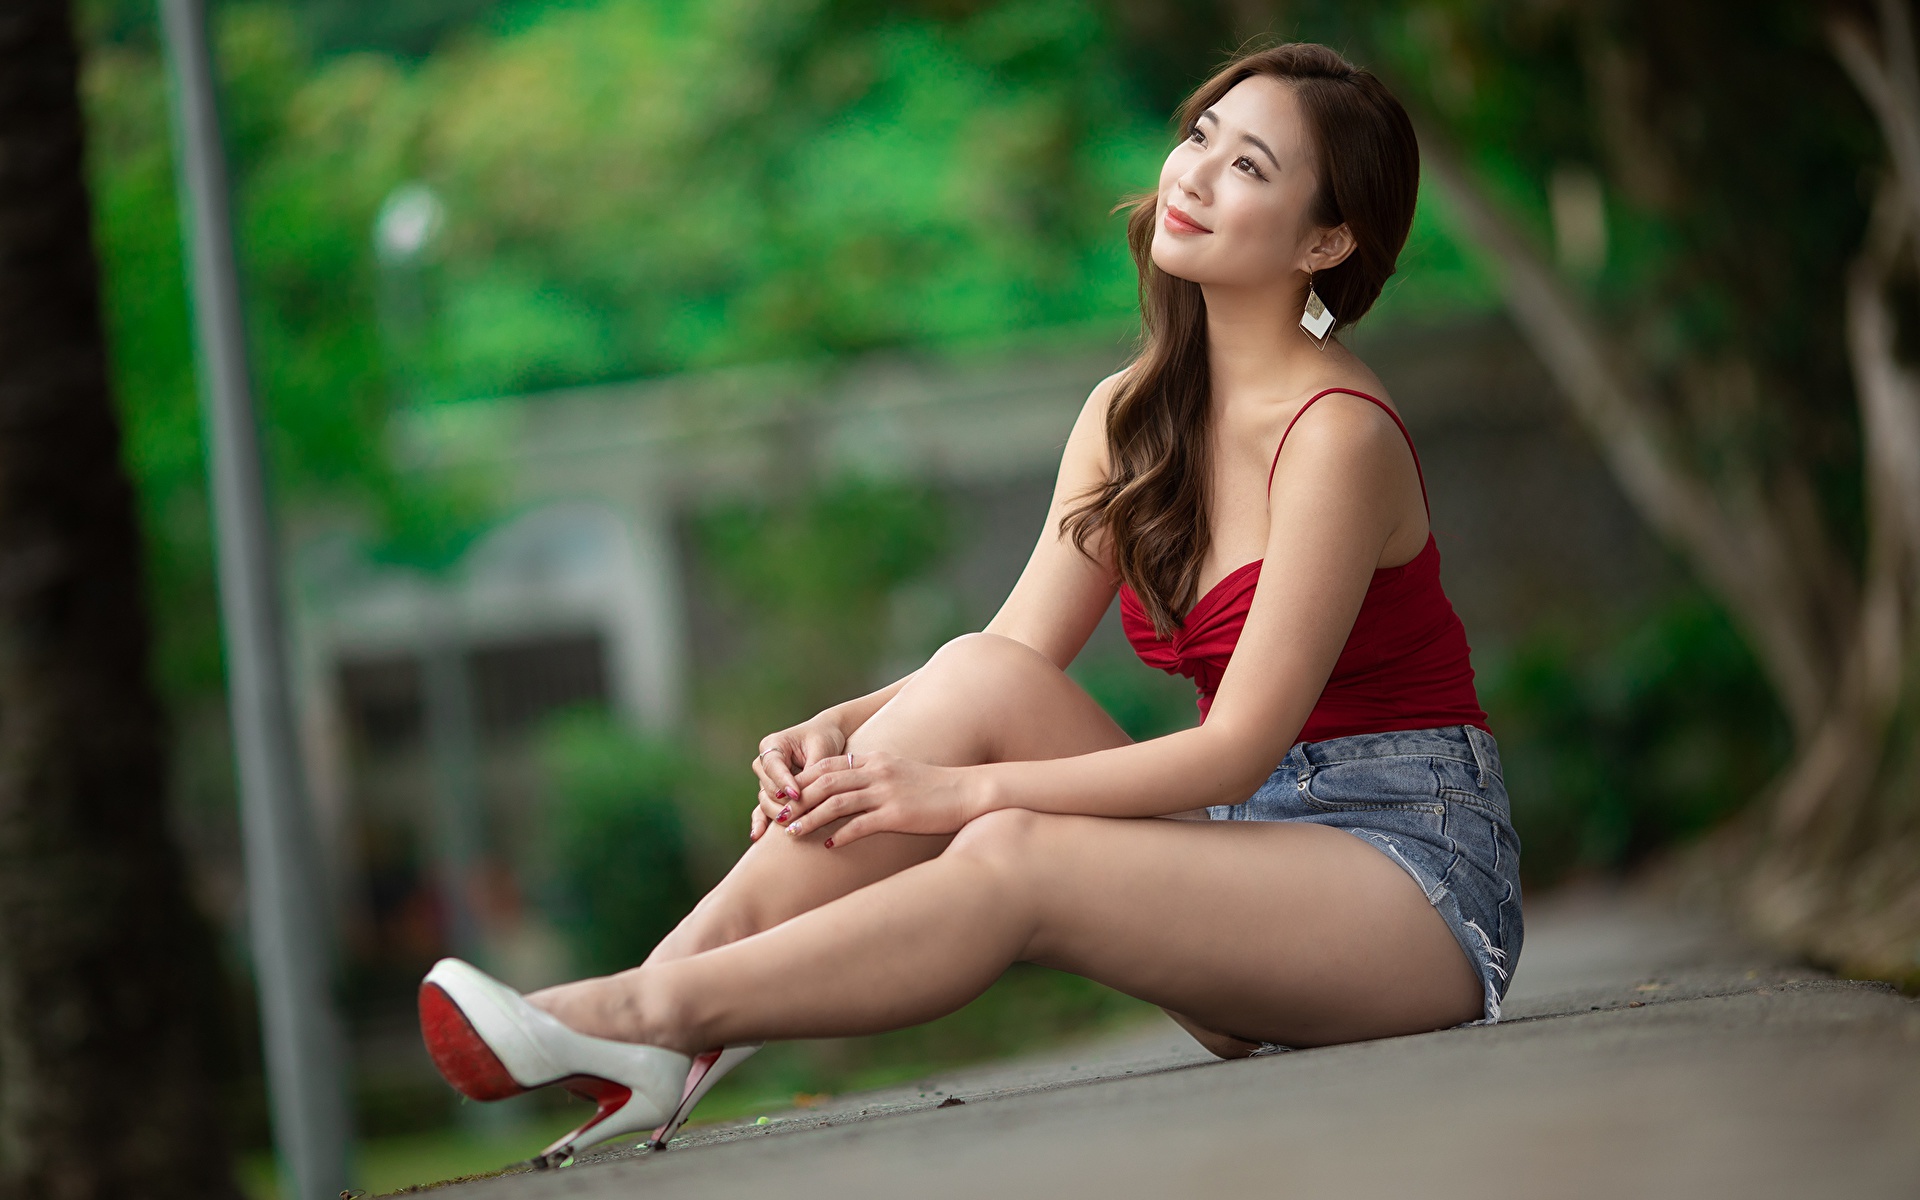 Model Women Red Lipstick Asian Red Tops Jeans Legs Hand On Leg Smiling Hair On Chest Sitting Women O 1920x1200